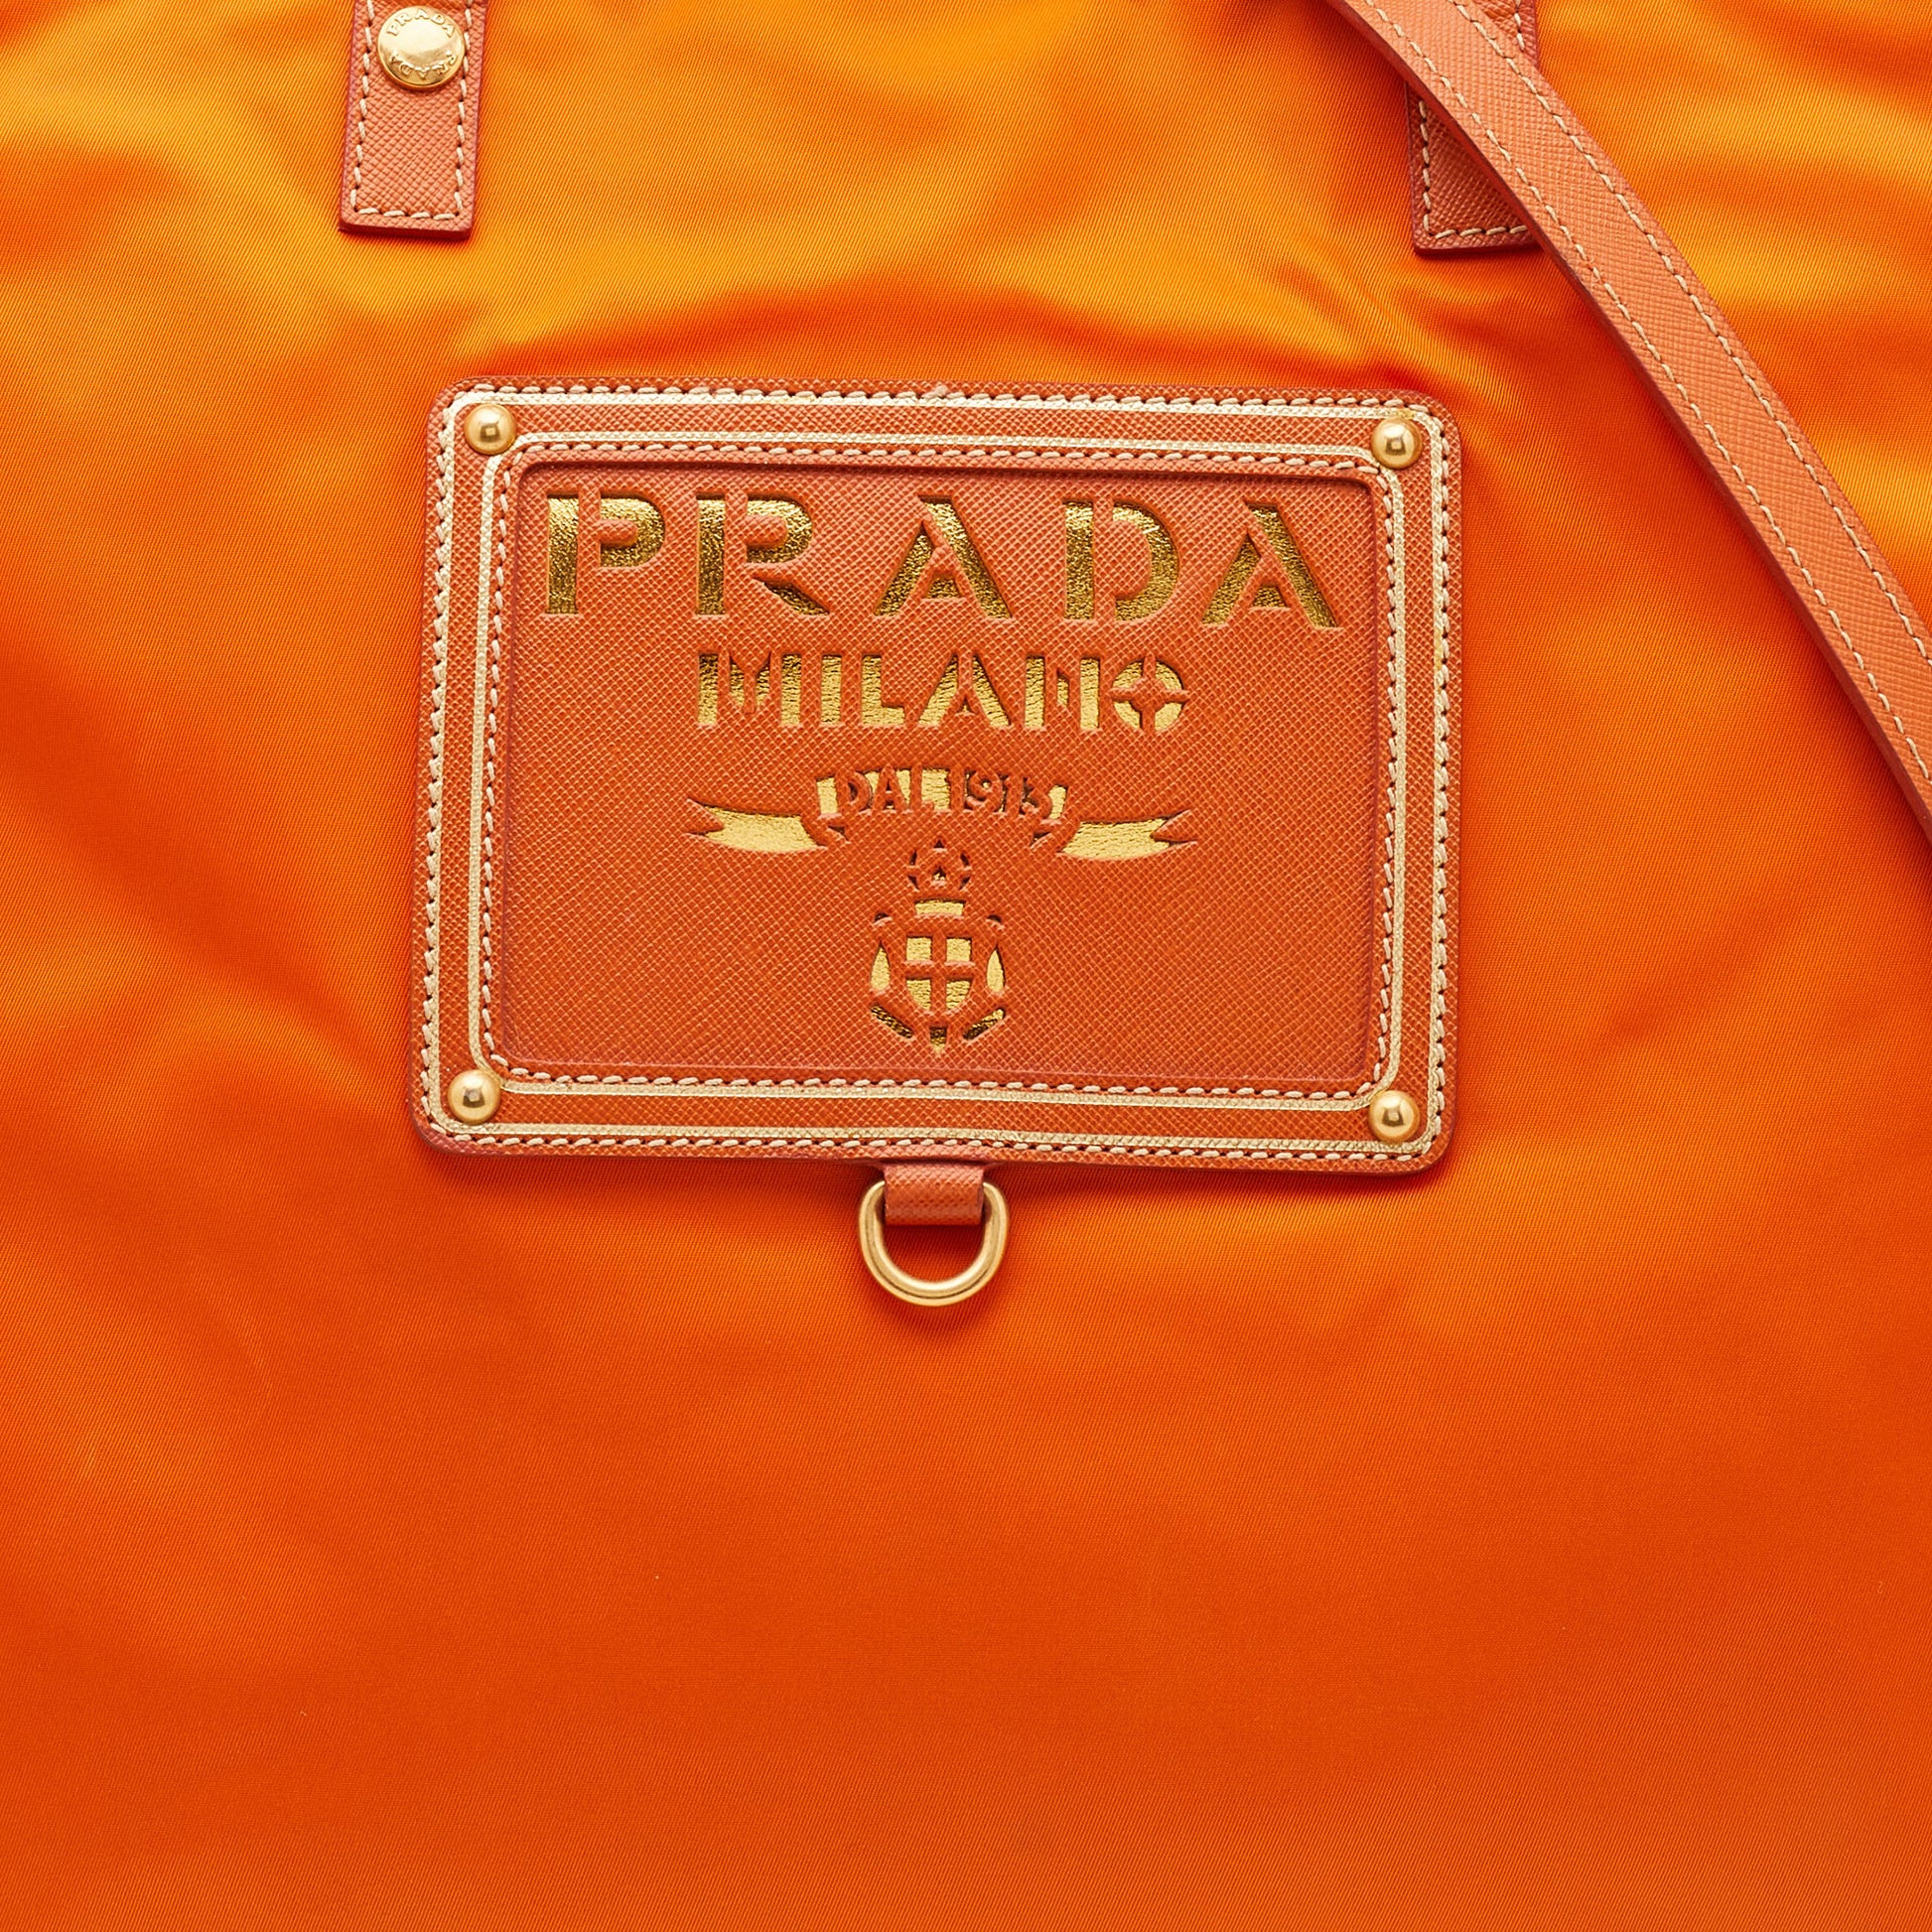 Prada Orange Tessuto Nylon and Saffiano Lux Leather Oro Tote Prada